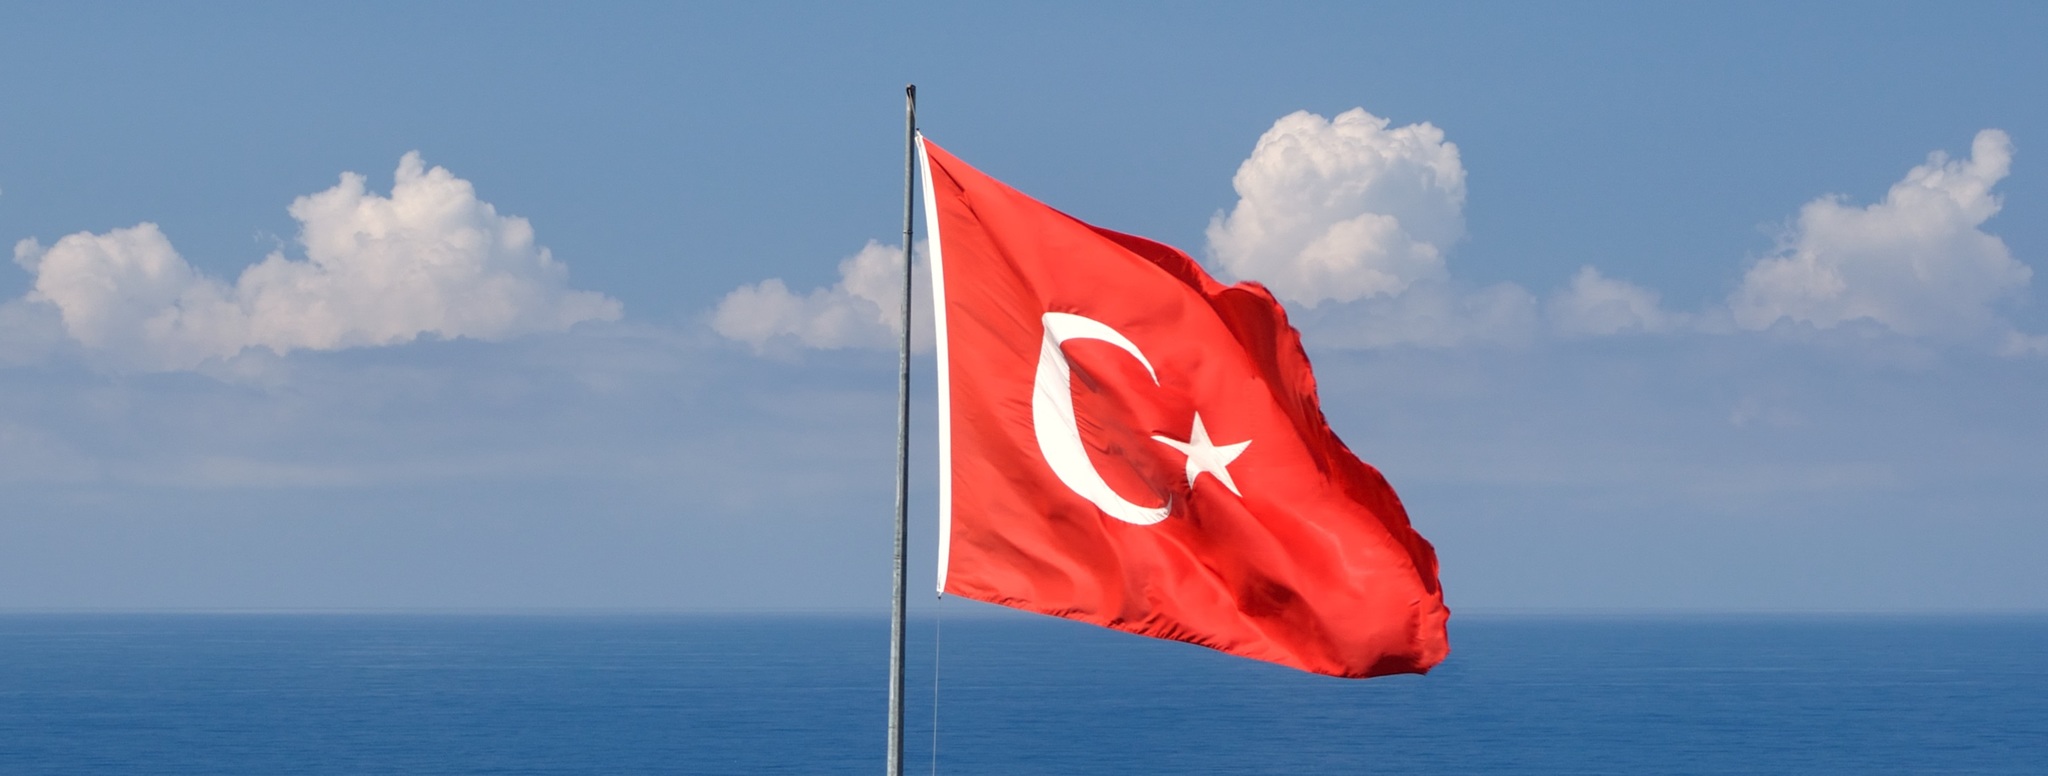 Фото турецкого флага на фоне моря